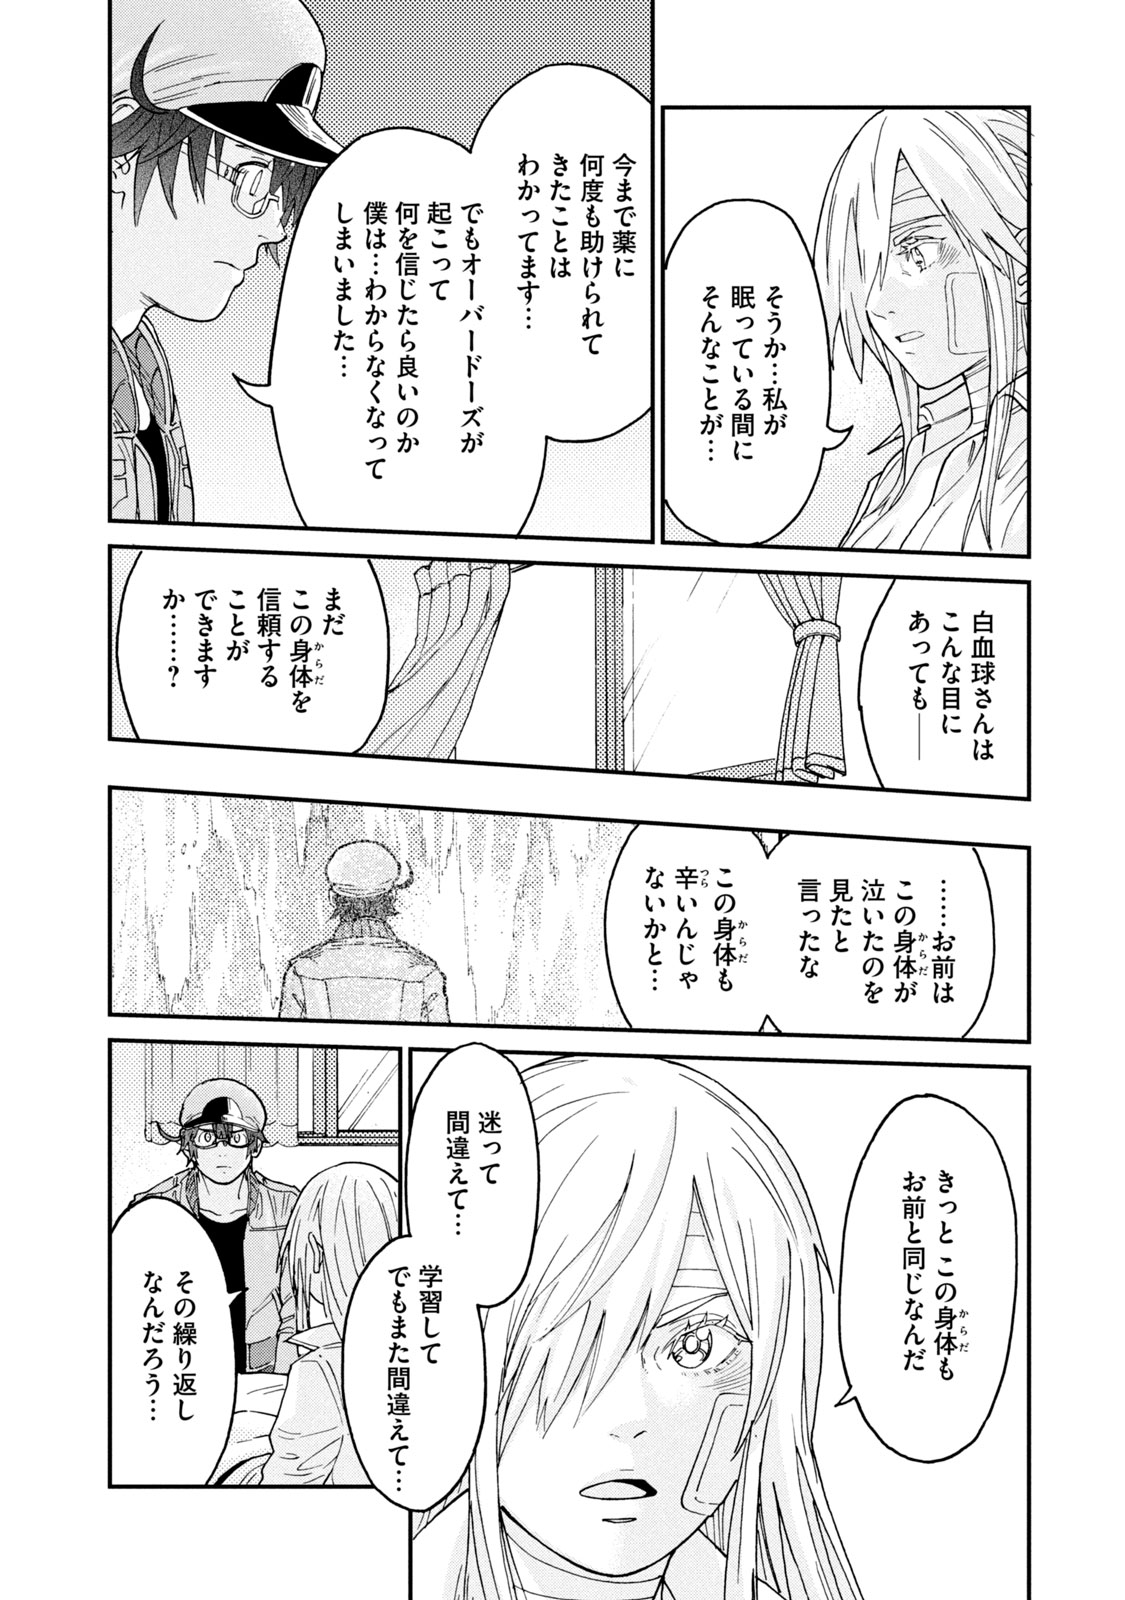 Hataraku Saibou BLACK - Chapter 36 - Page 22